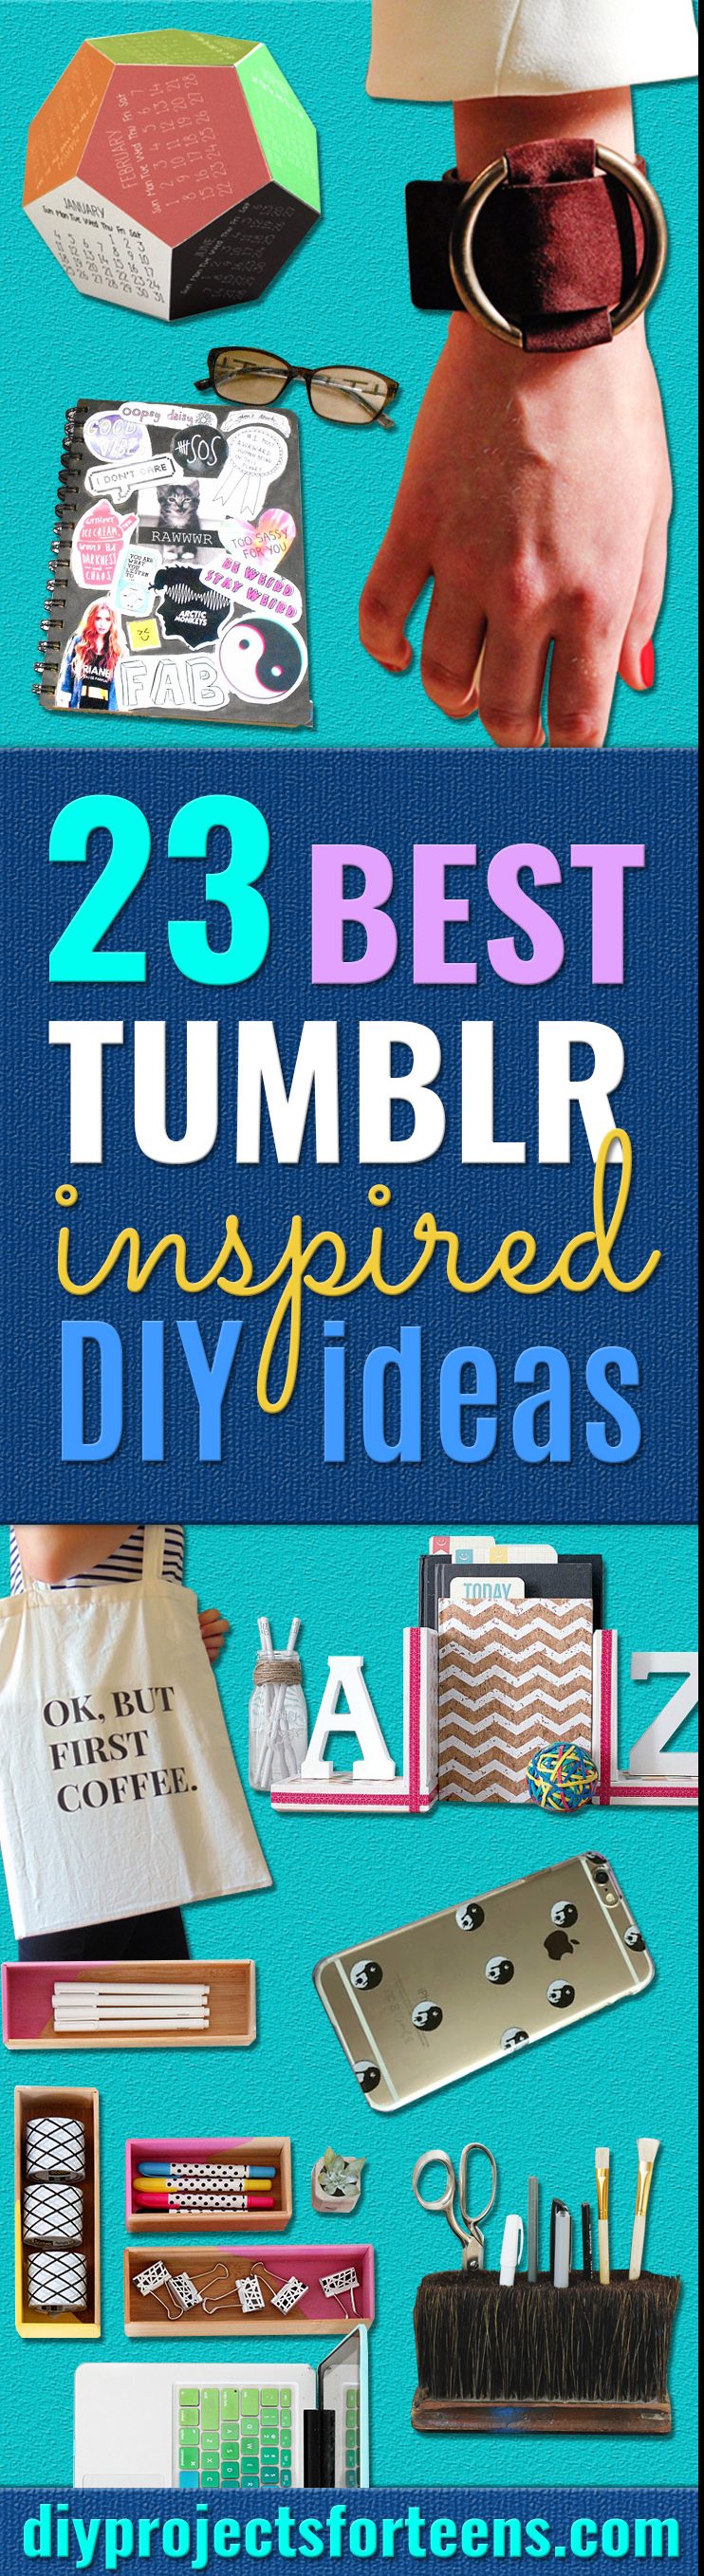 23 Best Tumblr Inspired DIY Ideas